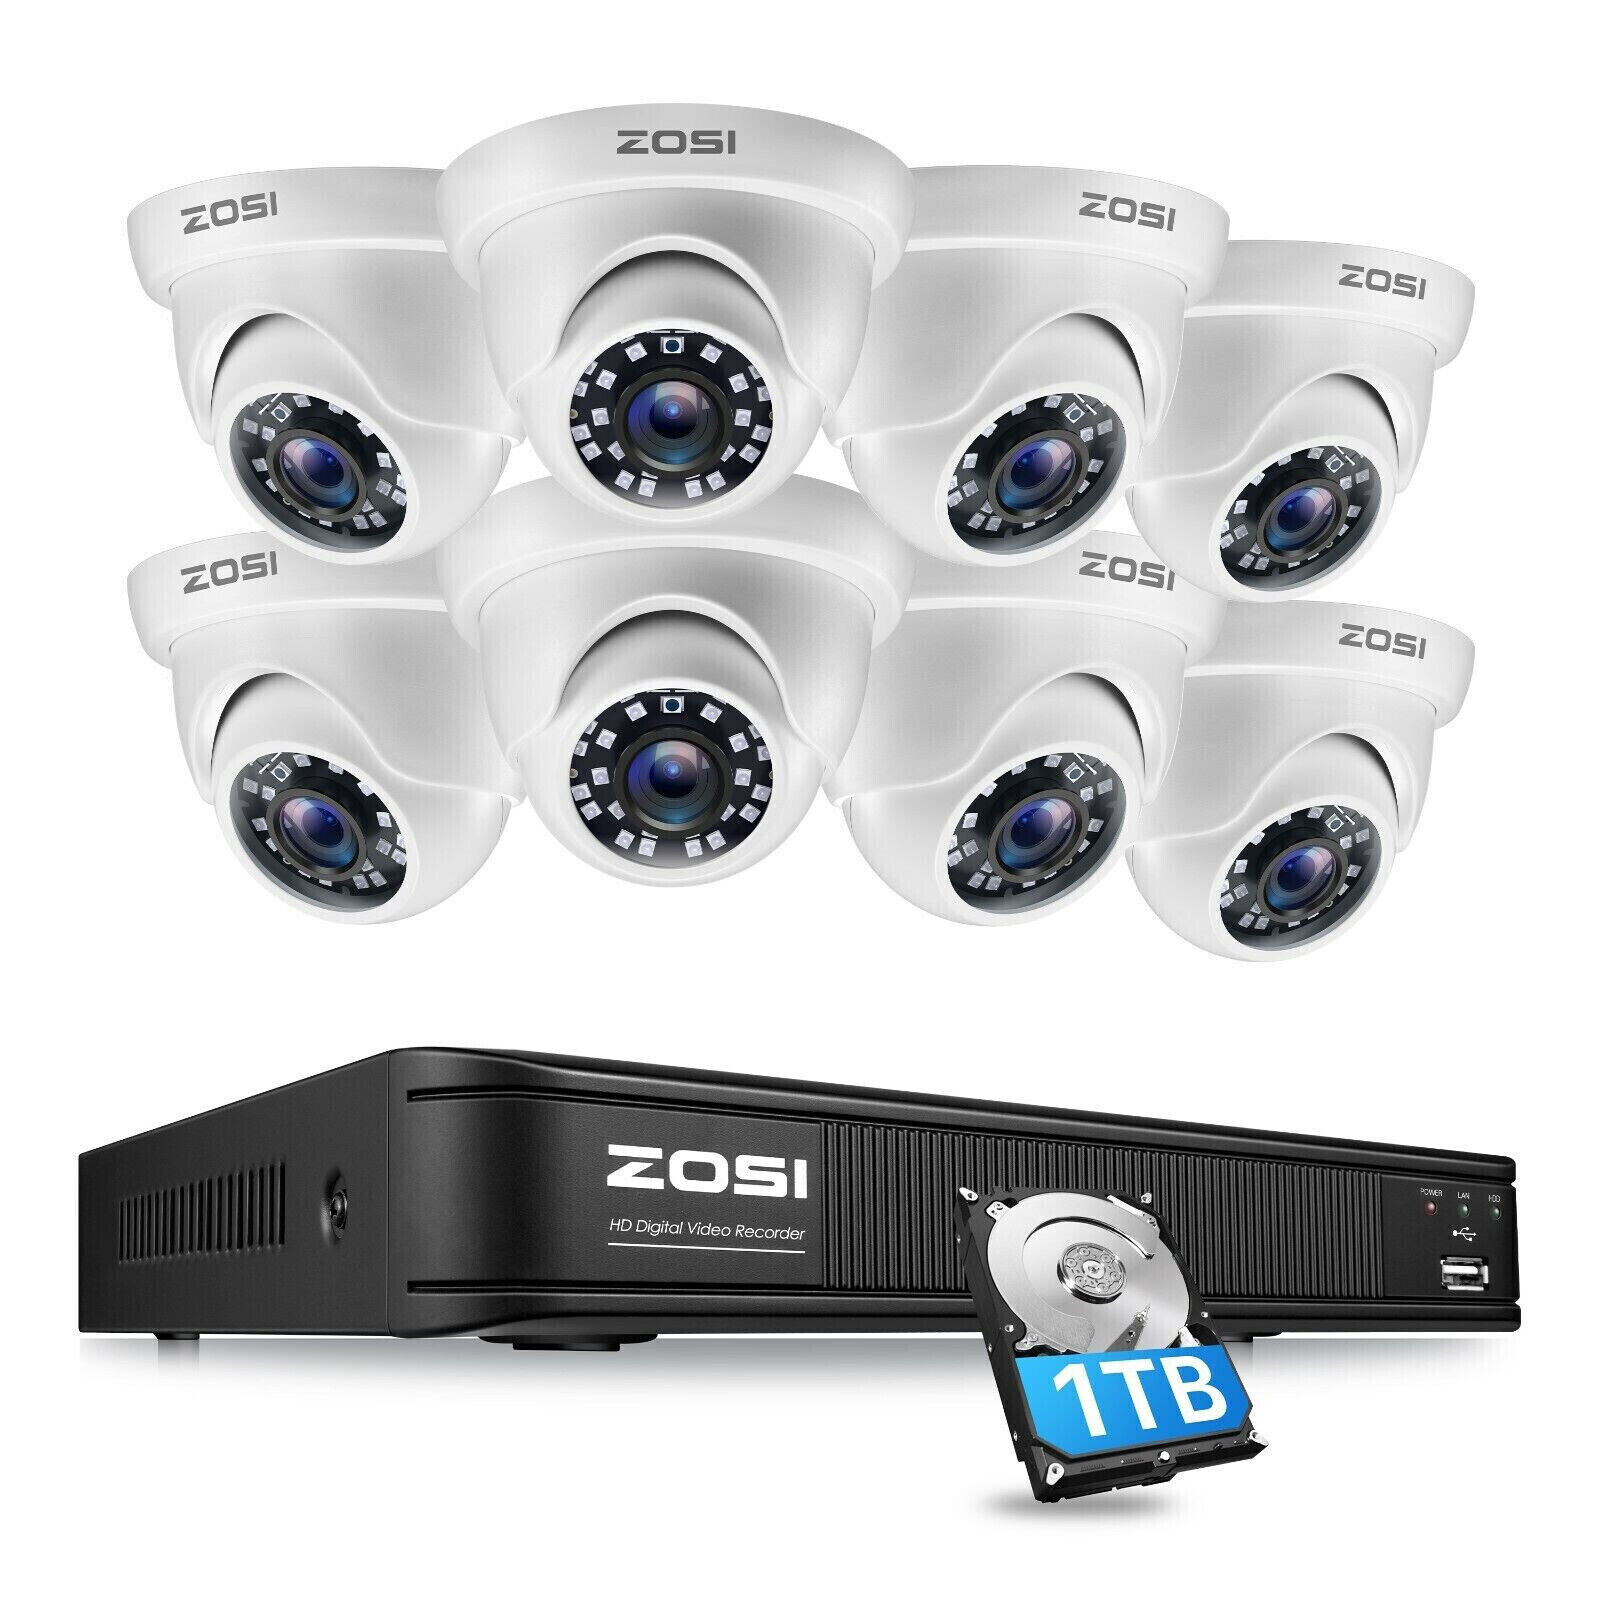 ZOSI 1TB 8CH 1080P DVR 1500TVL Outdoor IR LEDs Dome CCTV Security Camera System ZOSI Does Not Apply